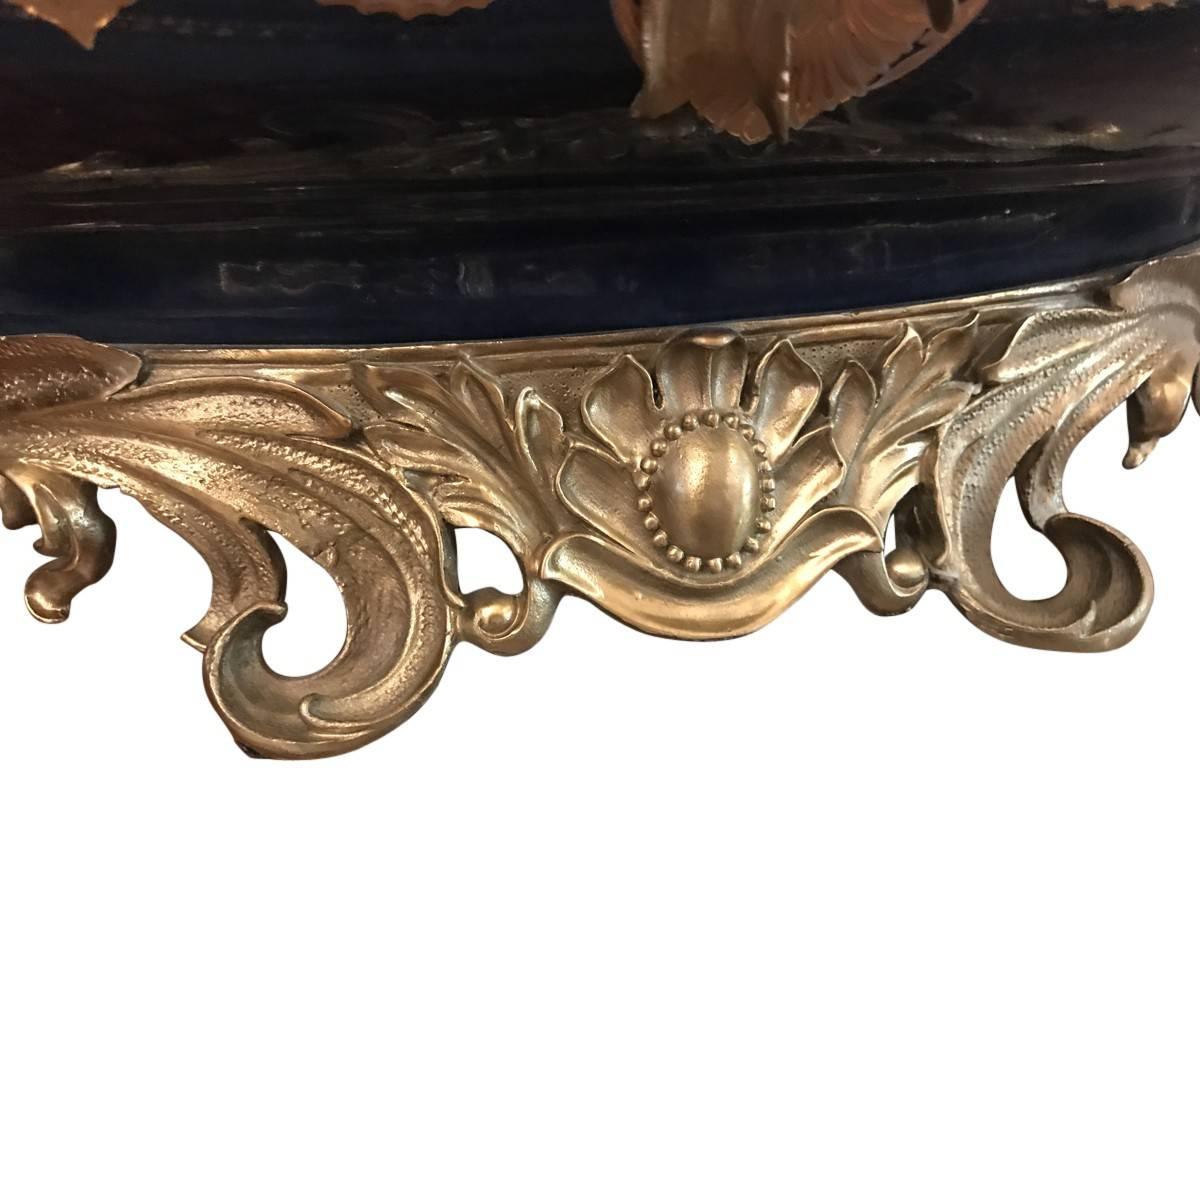 19th Century Louis XVI Style Gilt Bronze-Mounted Porcelain Centre Bowl